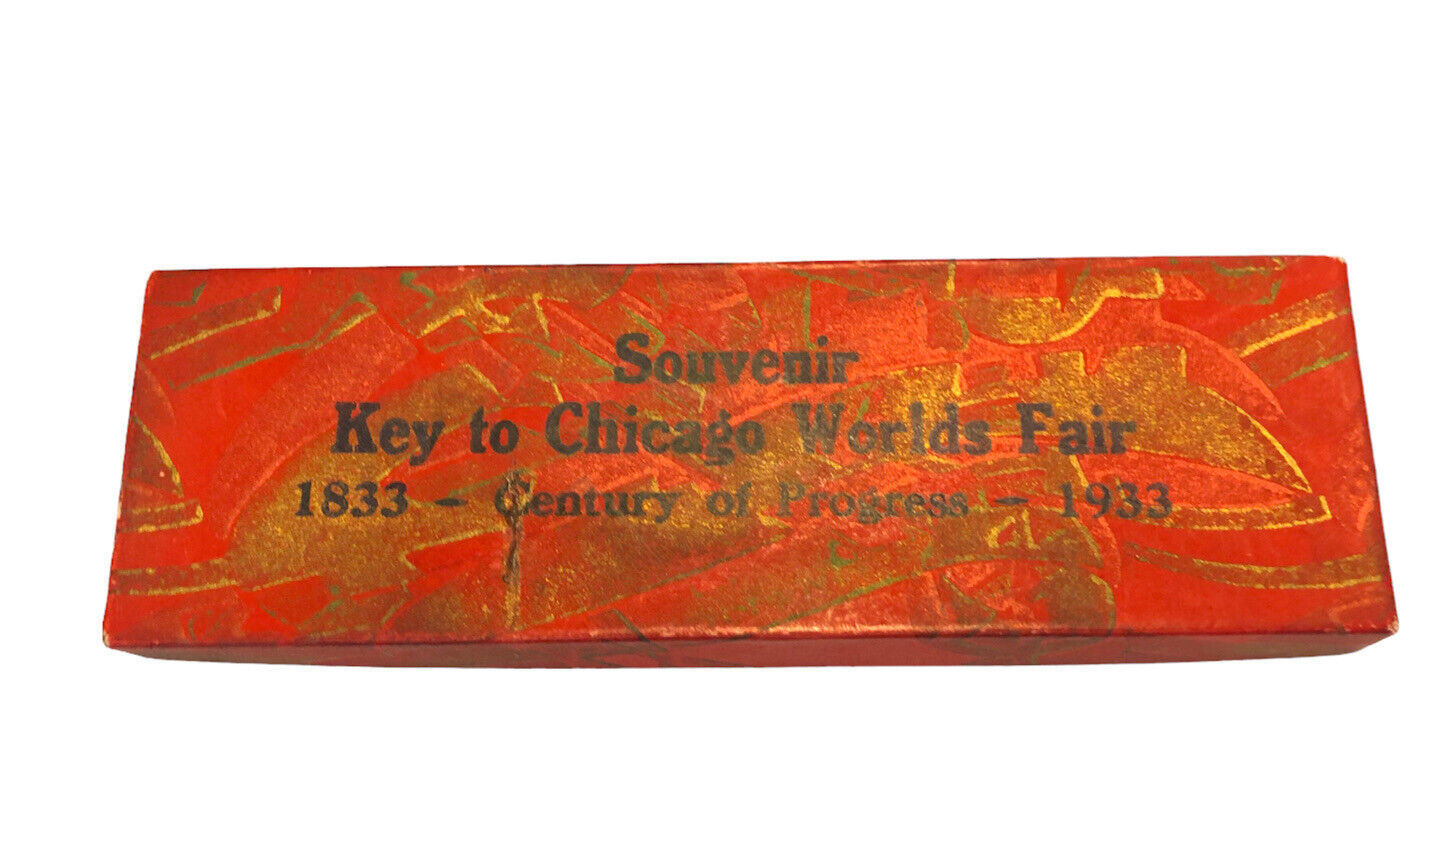 Vintage 1933 Chicago Worlds Fair Souvenir Century of Progress Brass Key-